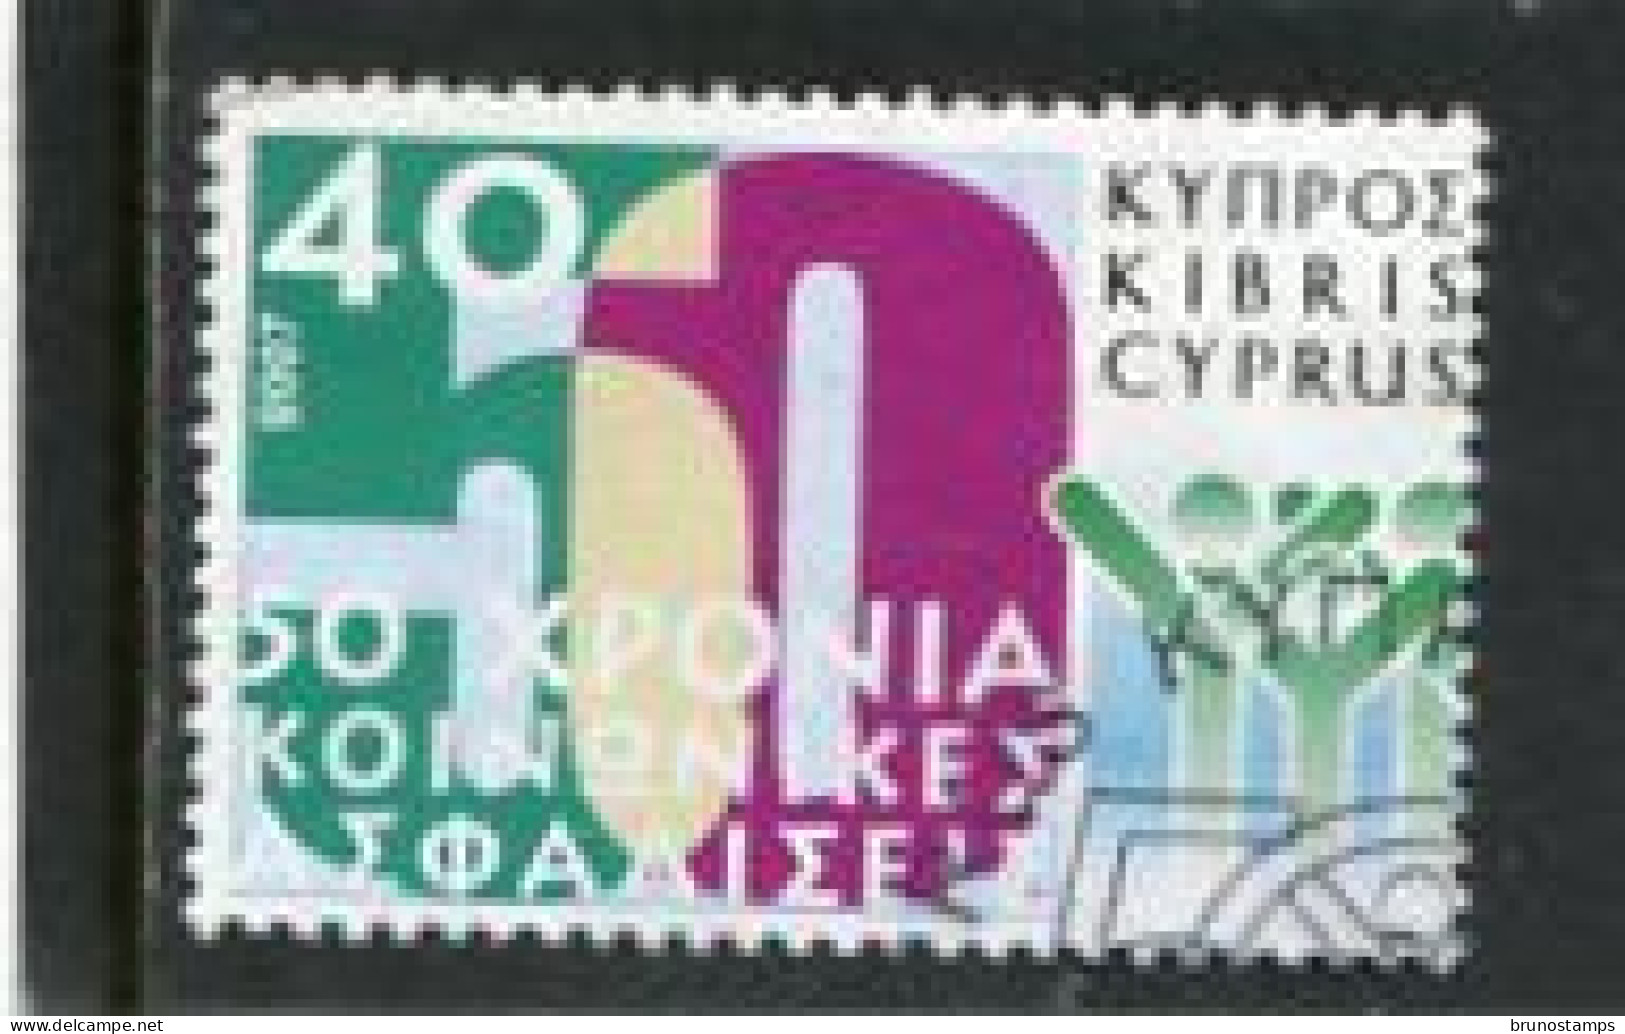 CYPRUS - 2007 SOCIAL SECURITY  FINE USED - Oblitérés